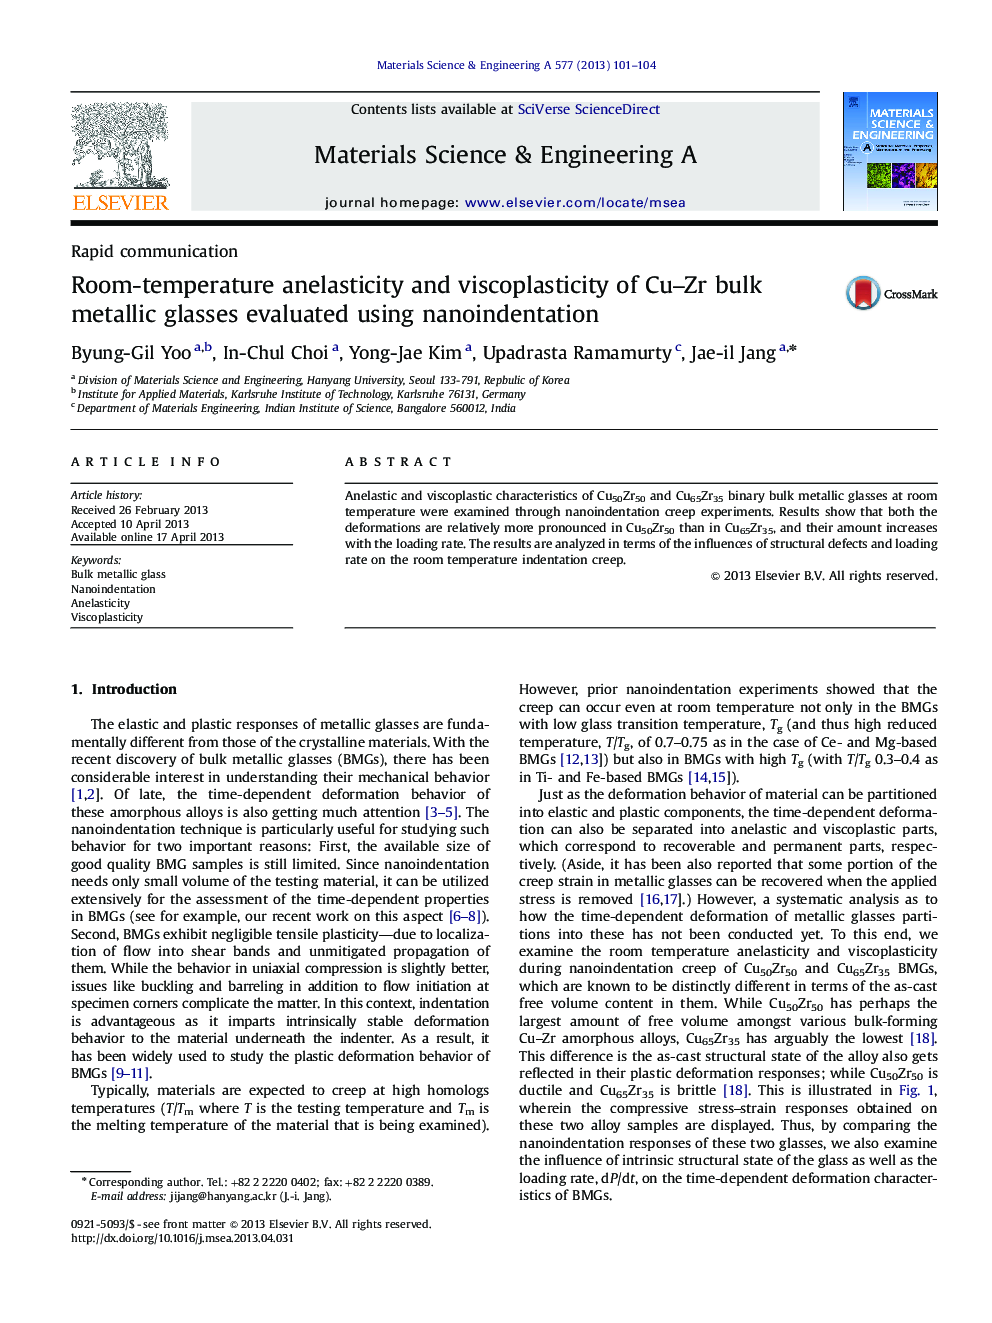 Room-temperature anelasticity and viscoplasticity of Cu-Zr bulk metallic glasses evaluated using nanoindentation